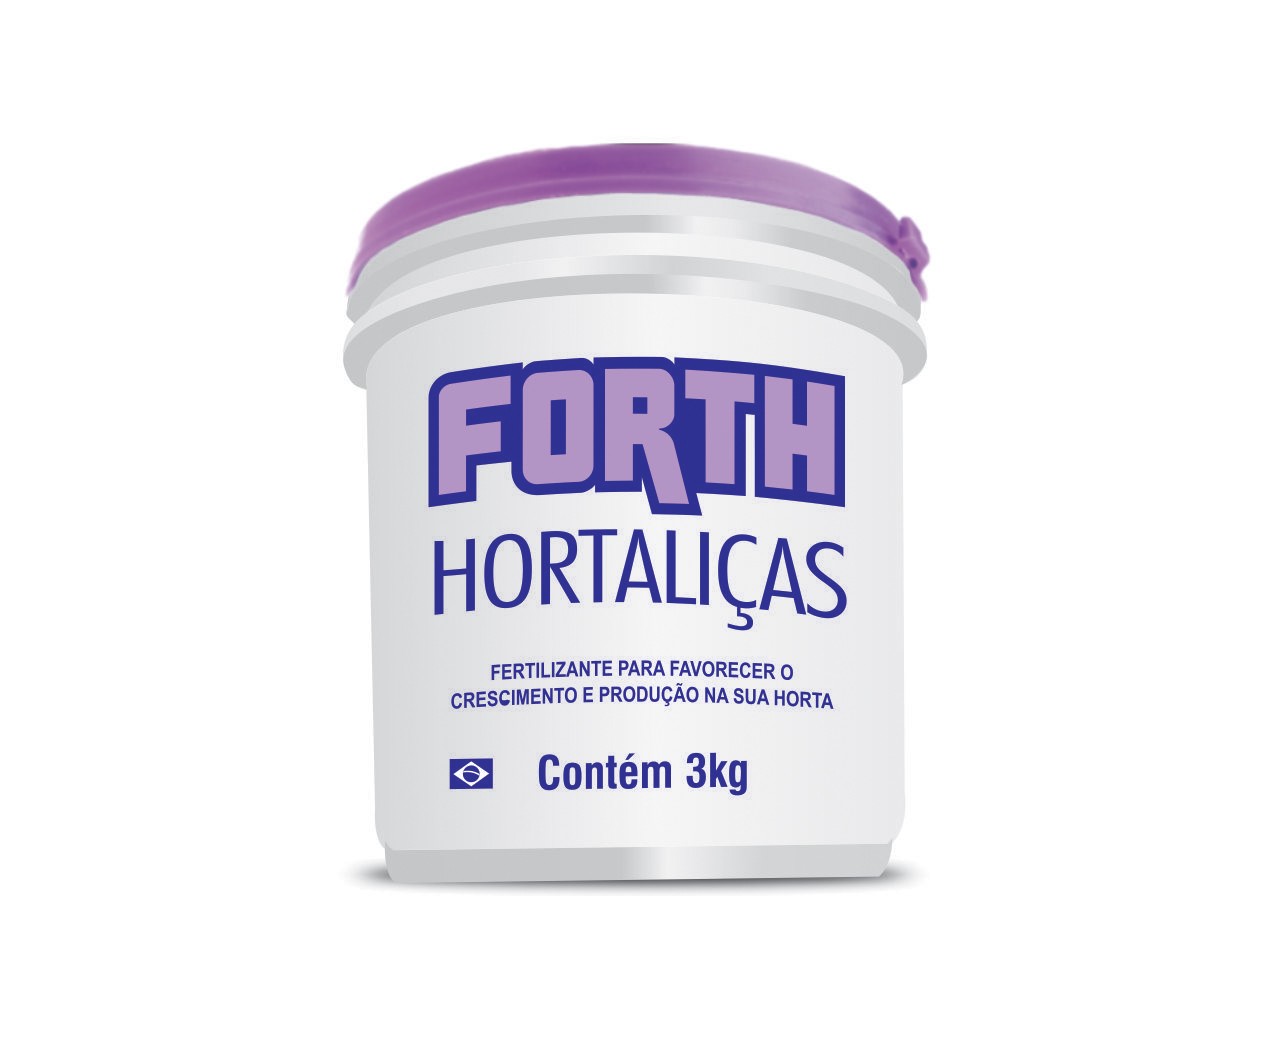 Fertilizante FORTH Hortaliças 3kg